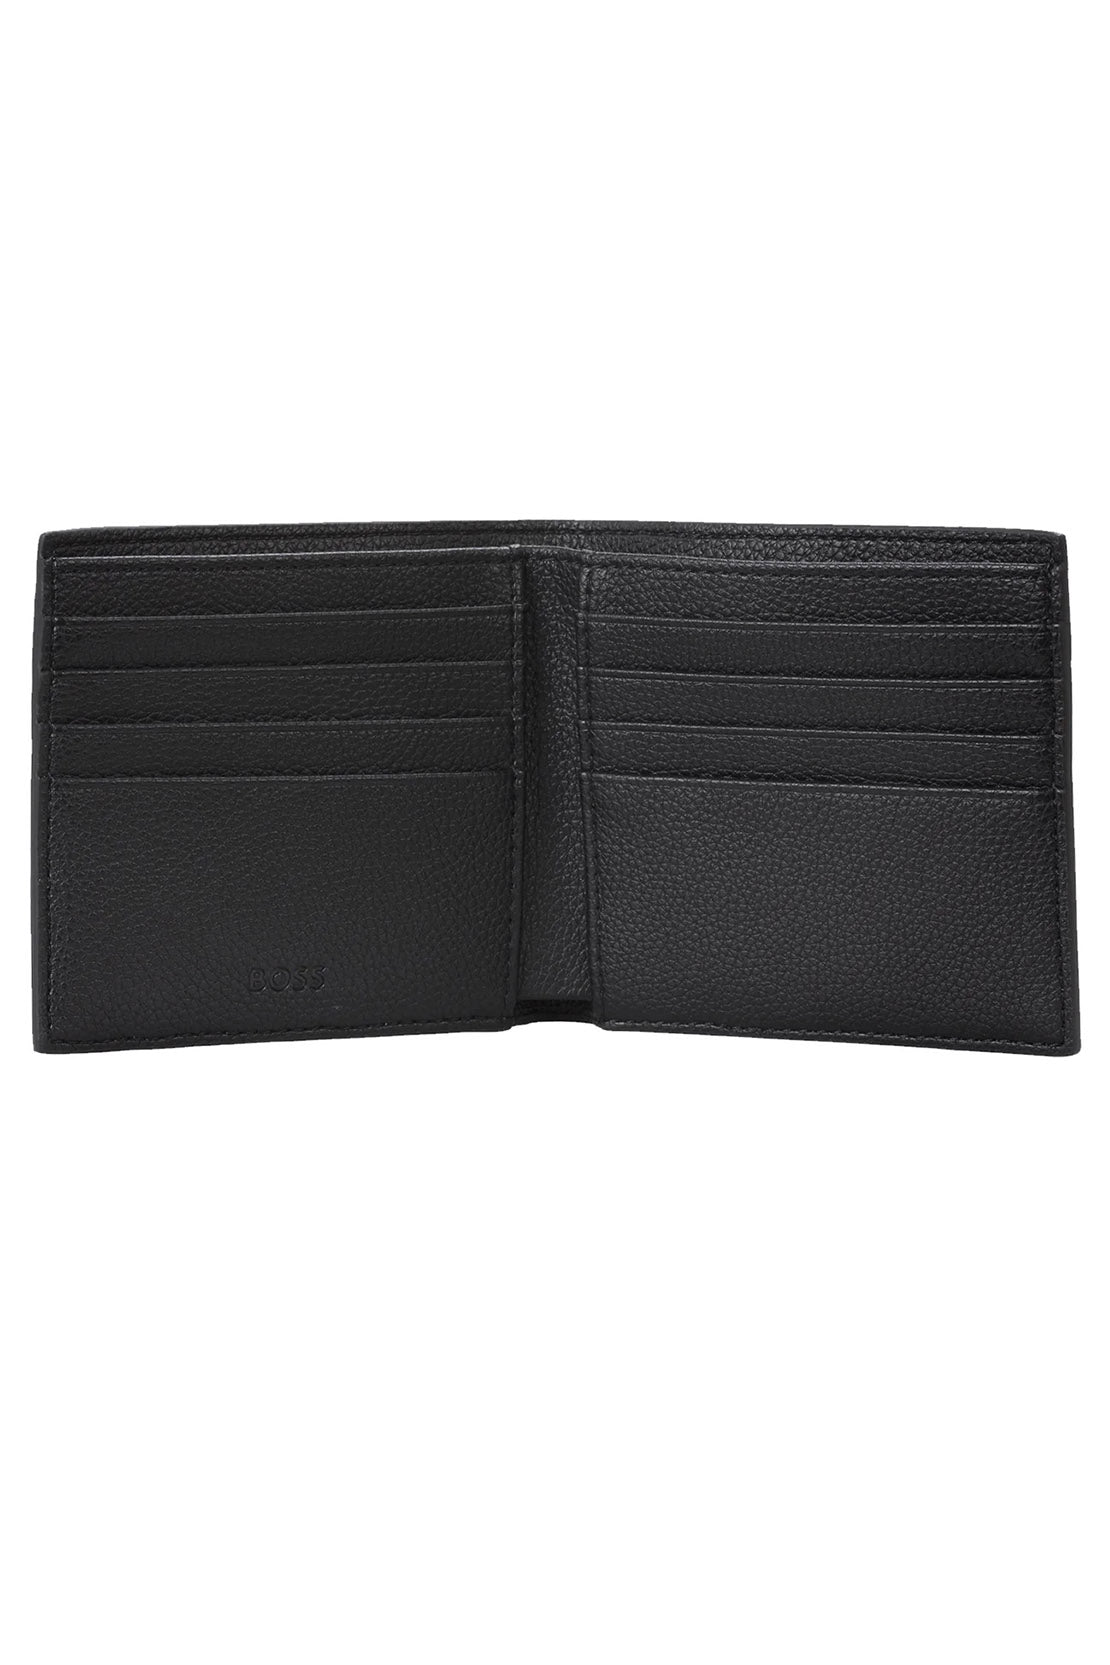 BOSS - RAY 8CC Billfold Wallet in Grained Black Faux Leather 50491957 001